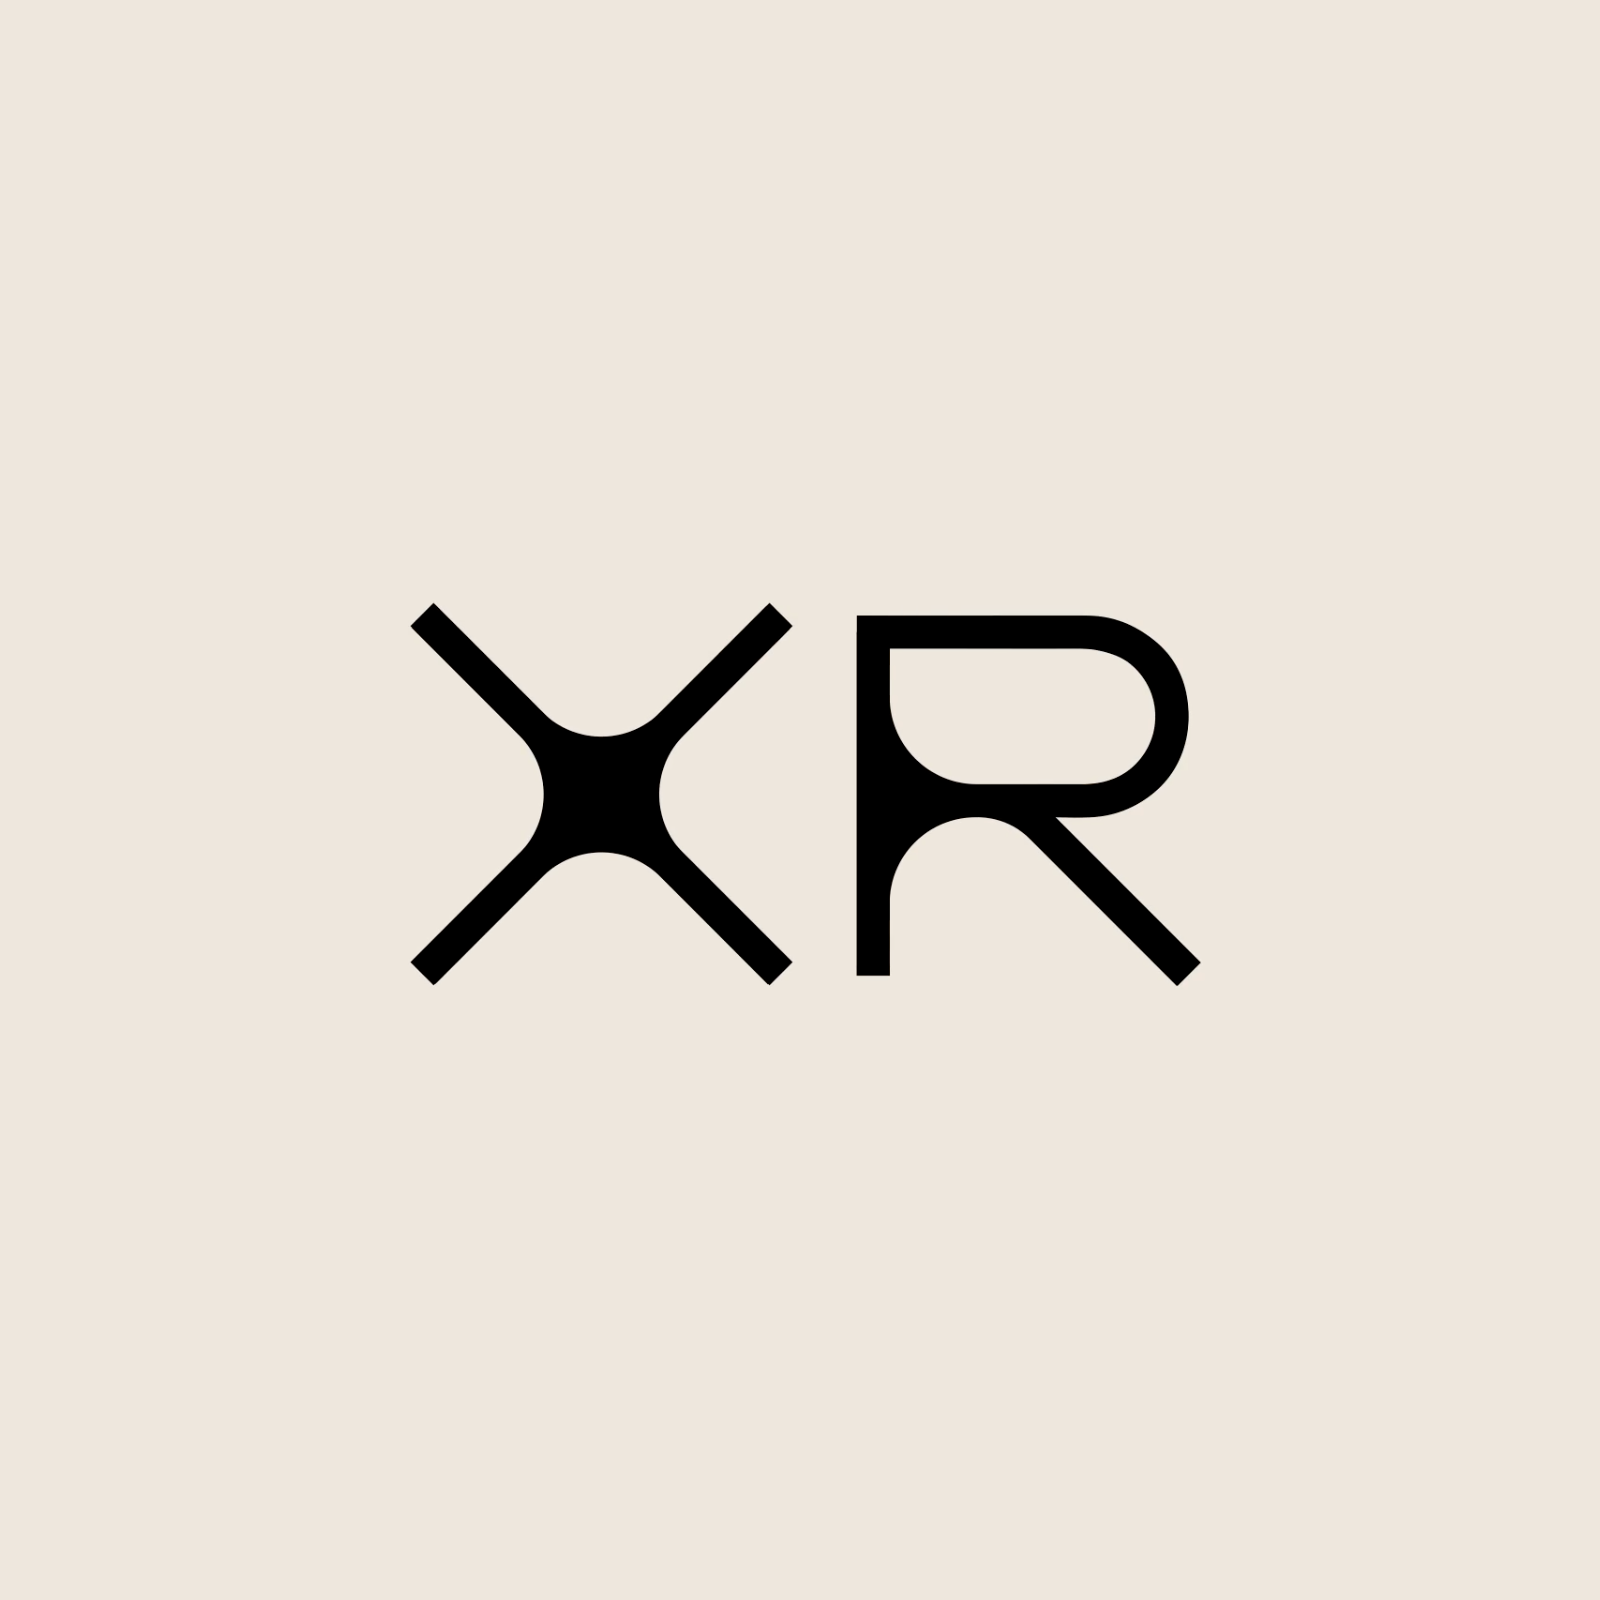 Insightful Design: Athletics' Branding for XR Unveiled